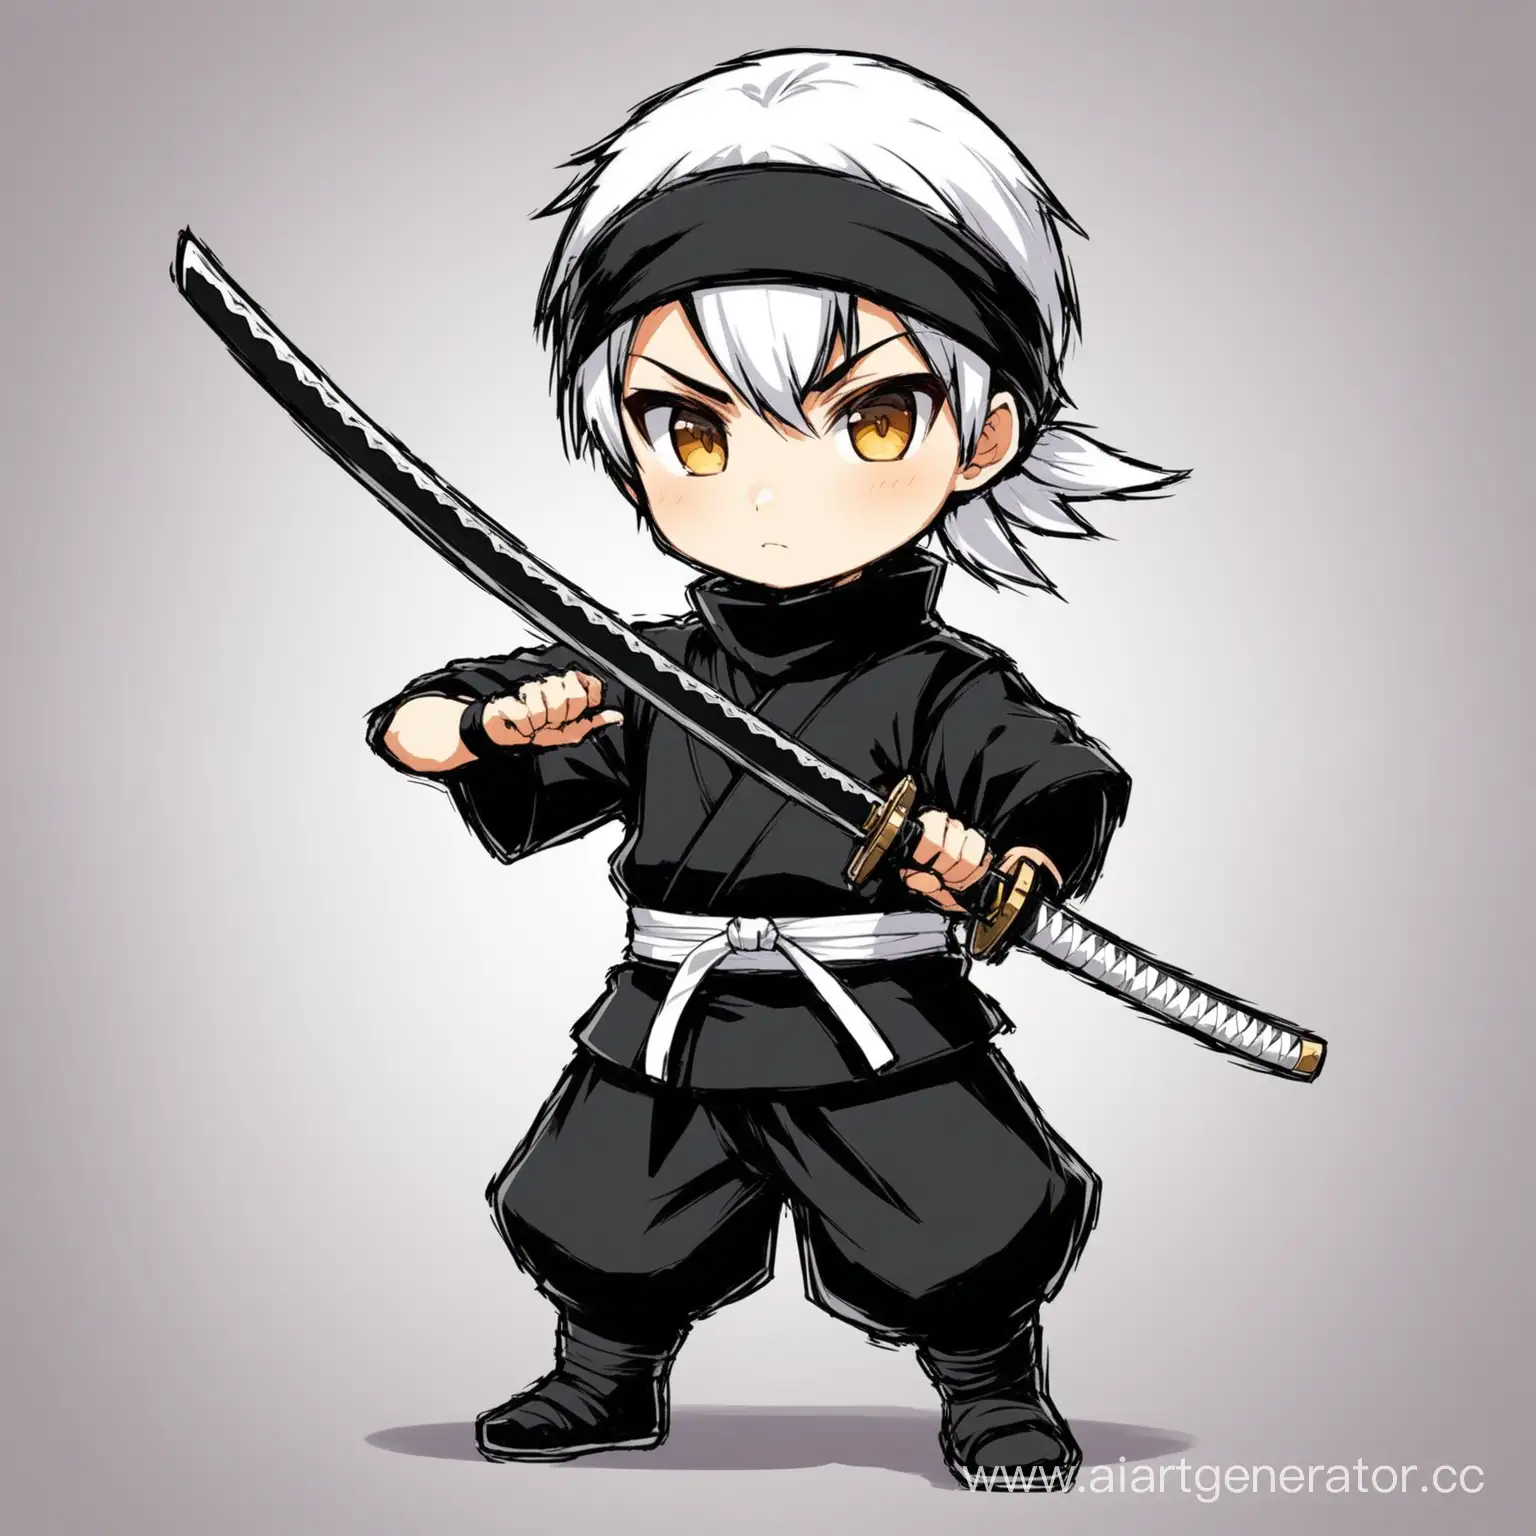 White-Anime-Ninja-Boy-with-Katana-and-Headband